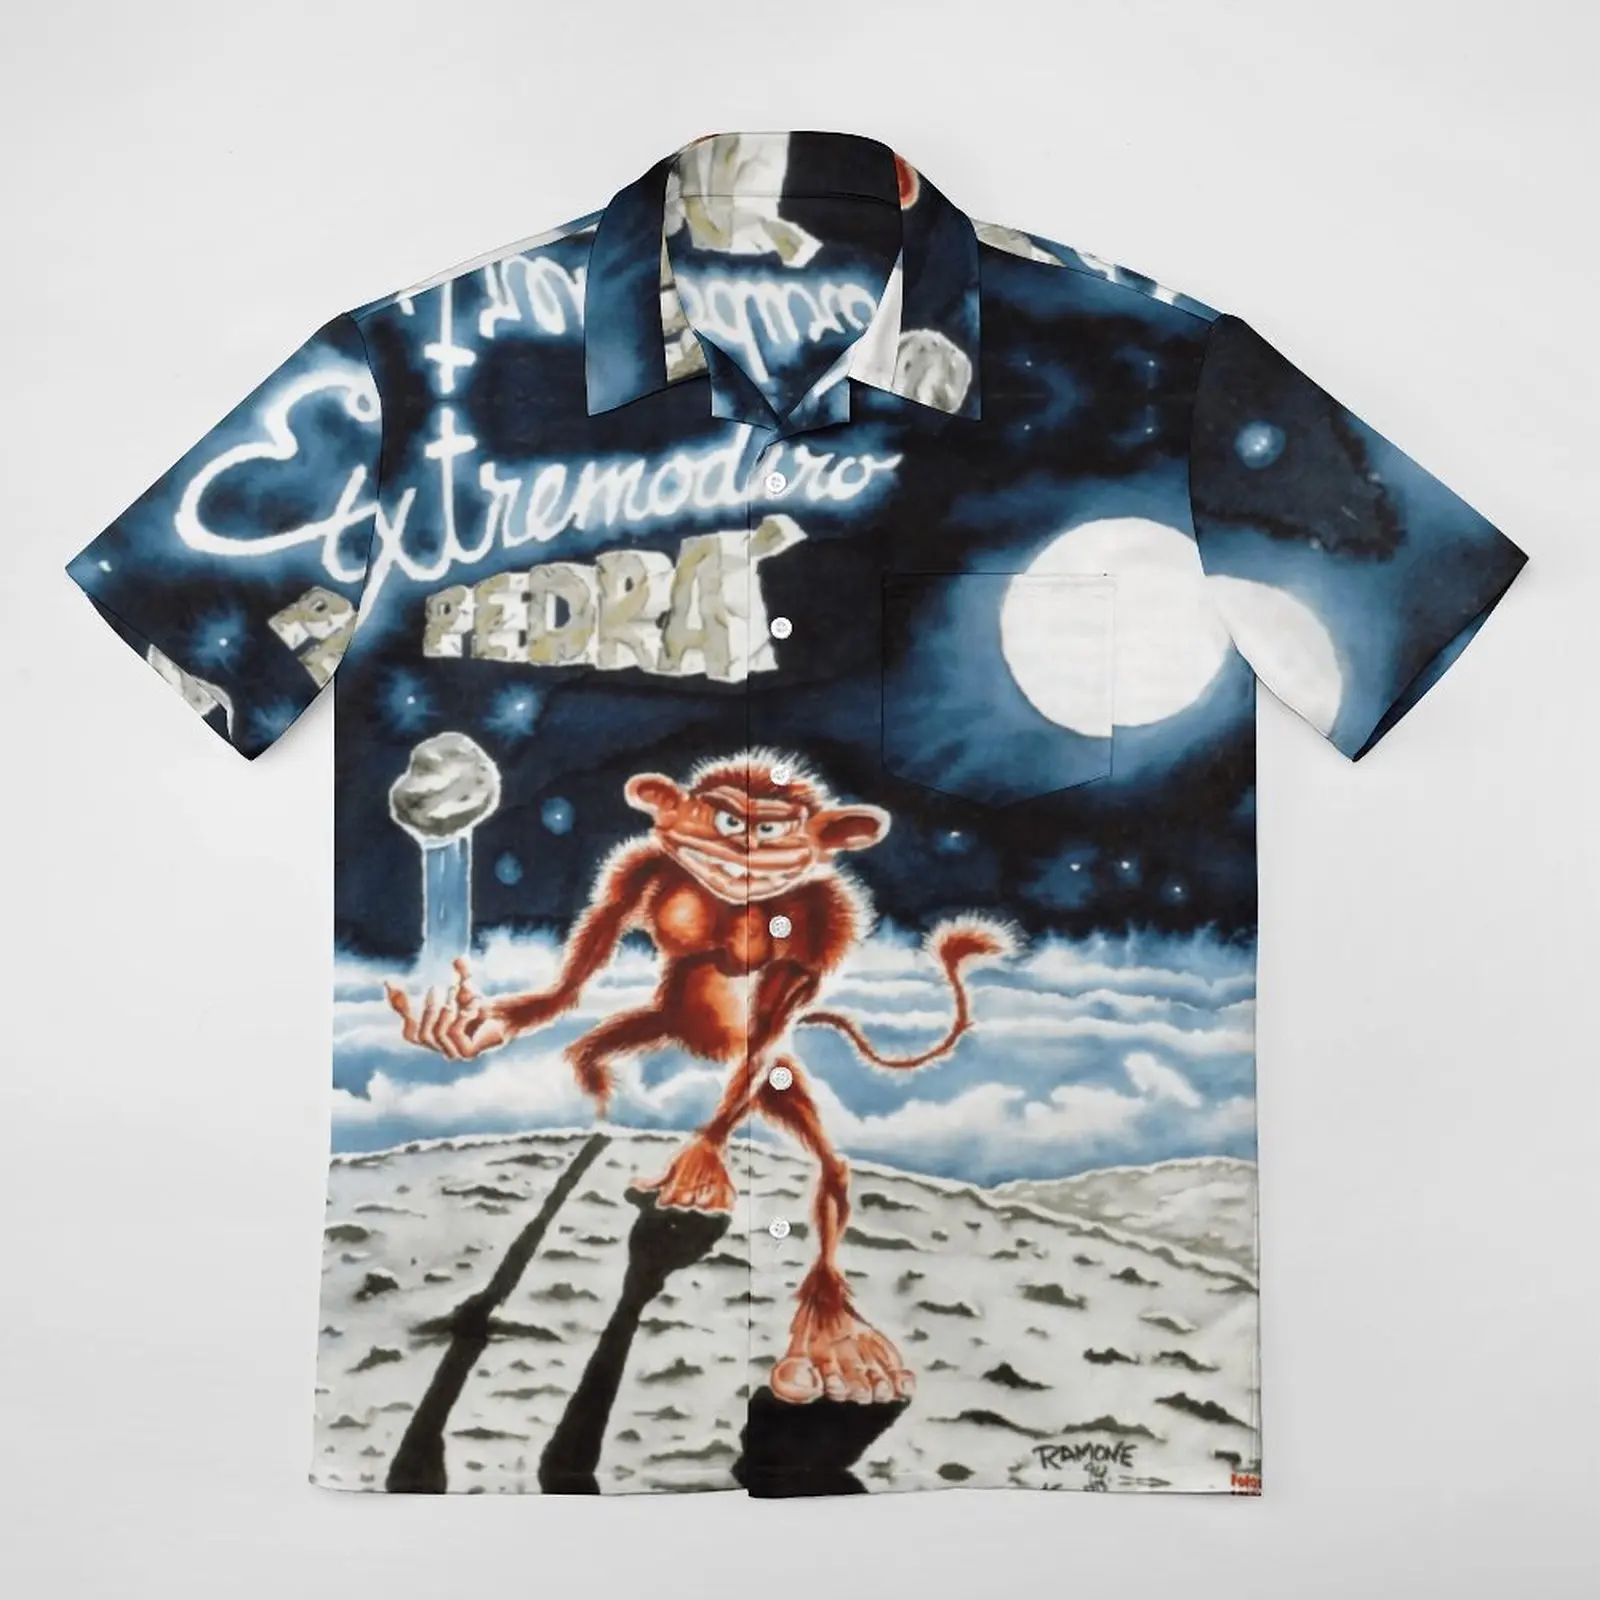 

Extremoduro-Pedra-Delantera Por Ramone Top Tee Funny Graphic Pantdress High Quality A Short Sleeved Shirt Beach USA Size